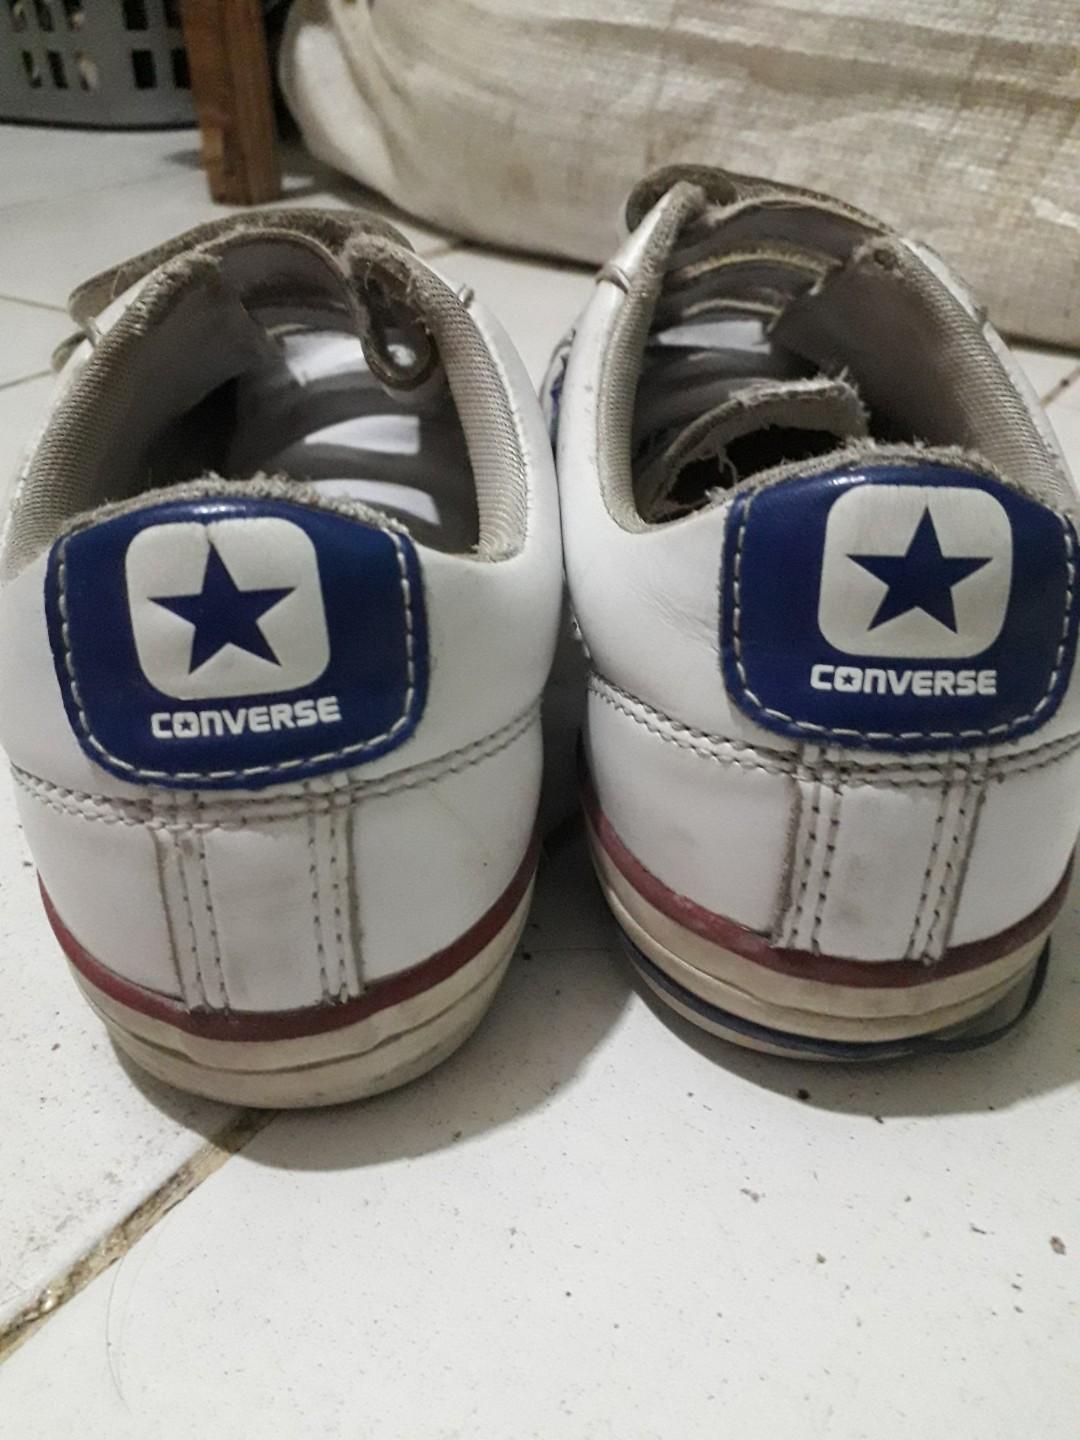 converse made in vietnam